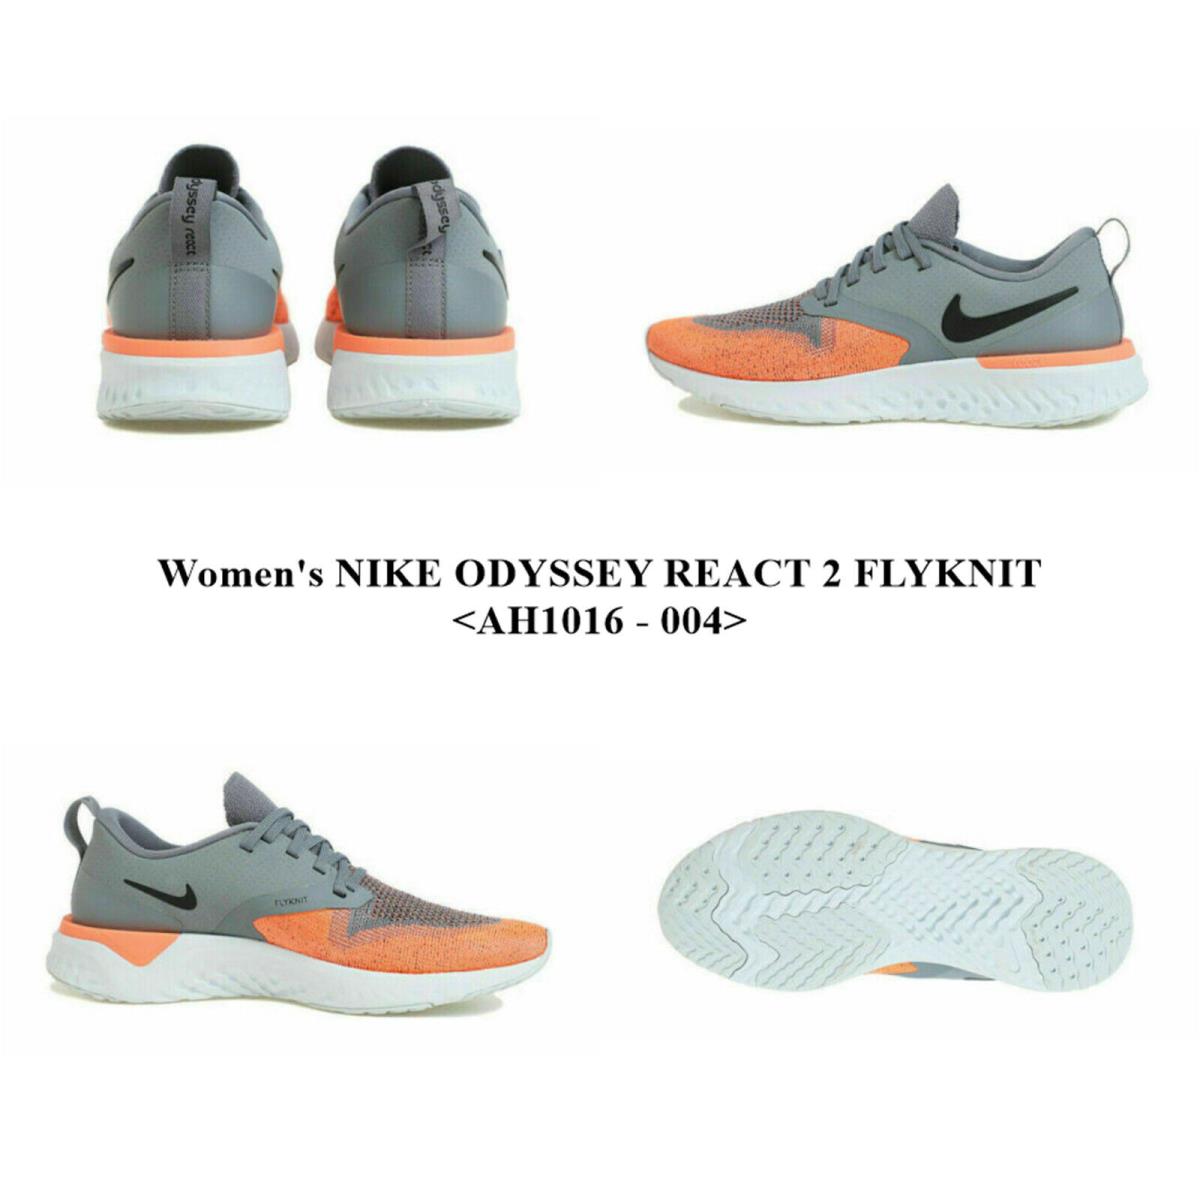 Women`s Nike Odyssey React 2 Flyknit <AH1016 - 004> Running/casual Shoes.nwbox - COOL GREY / BLACK-BRIGHT MANGO